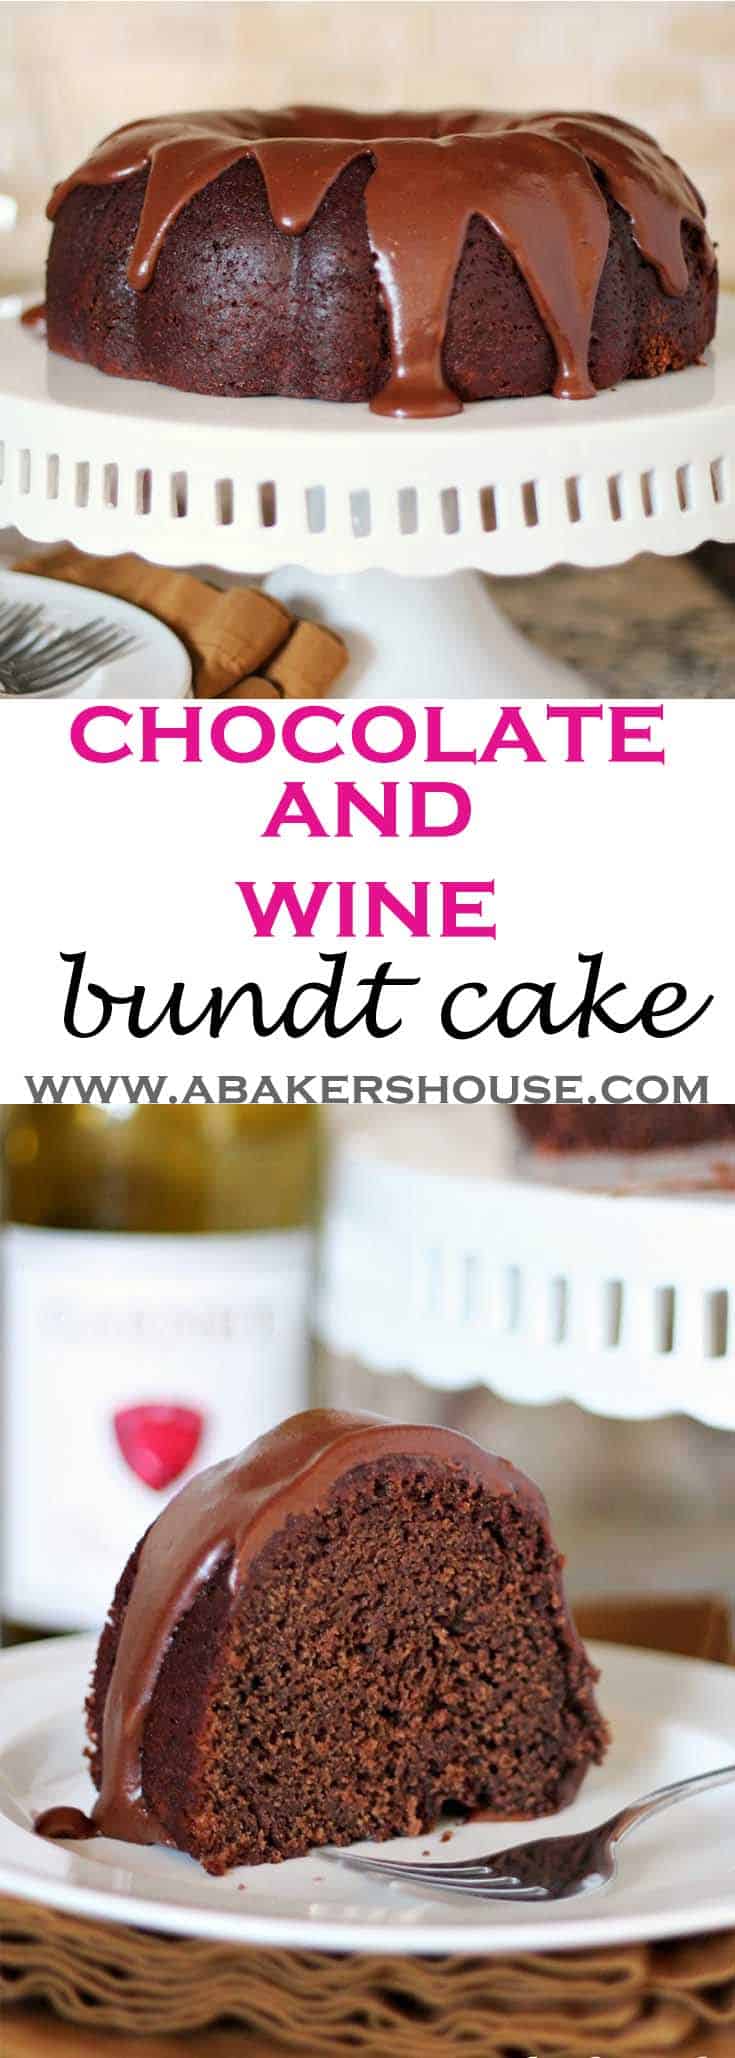 Chocolate and Wine Bundt Cake for #BundtaMonth | A Baker's House